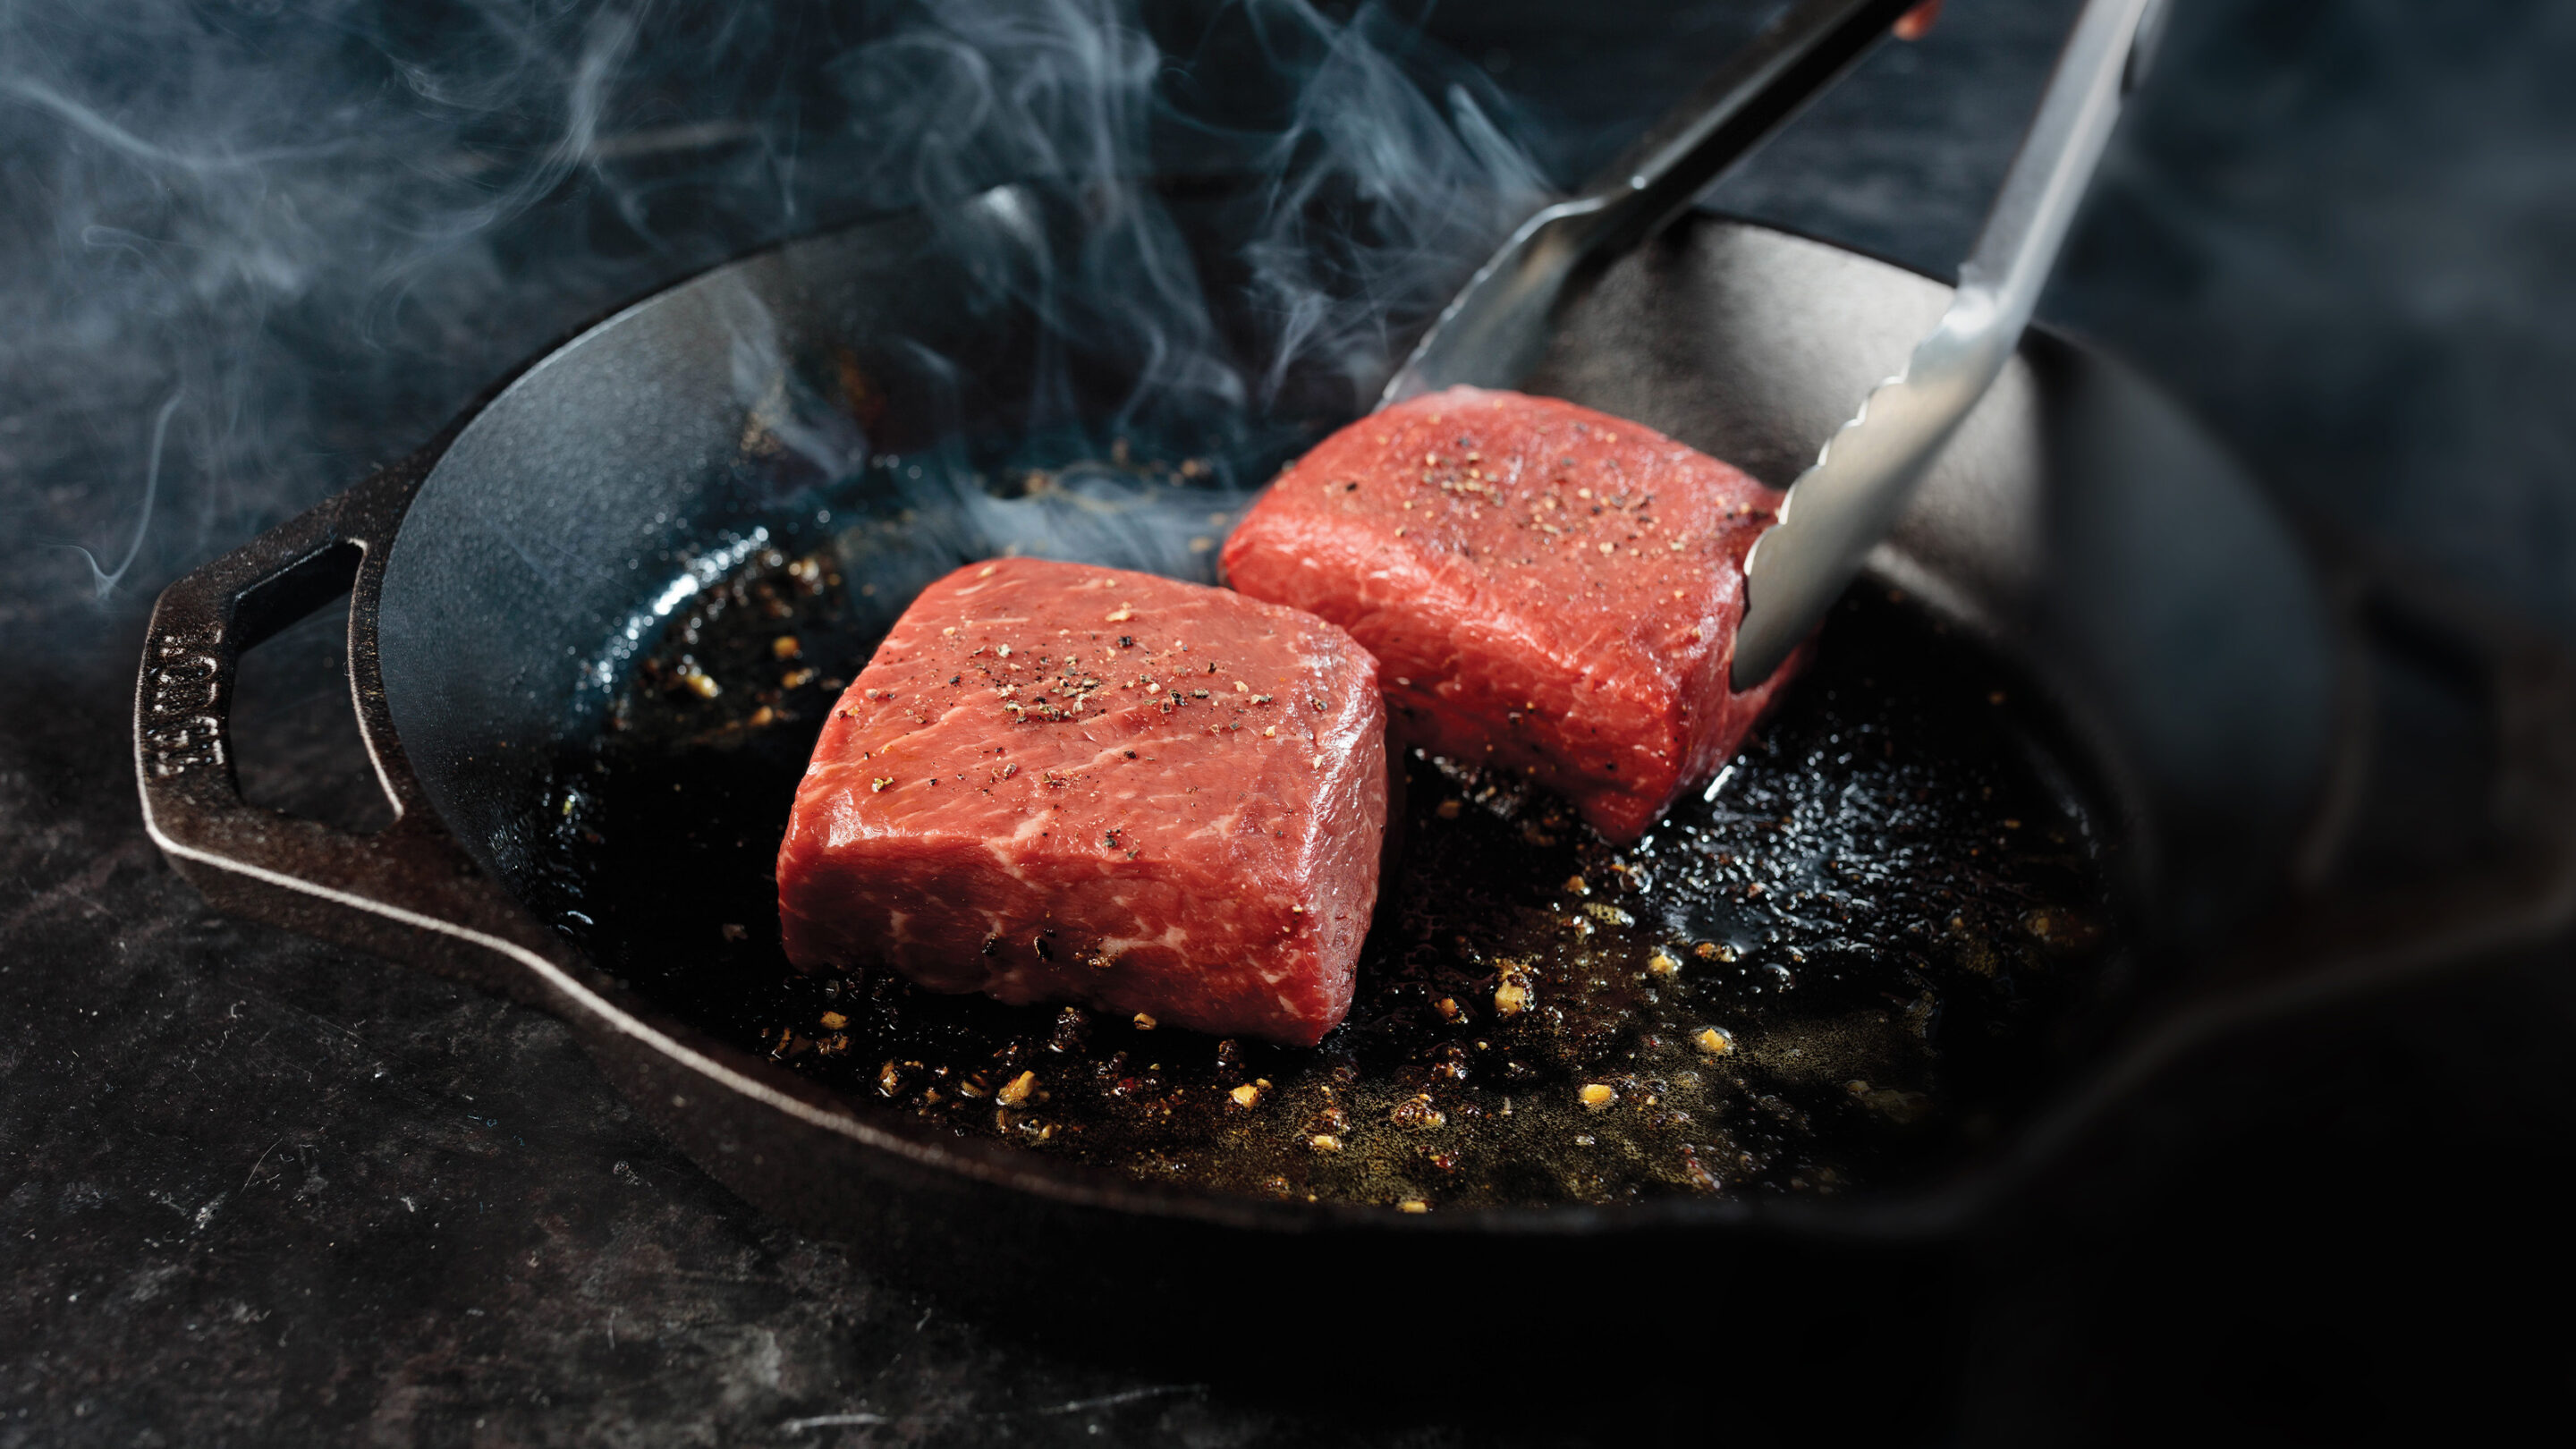 https://blog-content.omahasteaks.com/wp-content/uploads/2022/06/blogwp_unique-ways-to-cook-a-steak-scaled-1.jpg